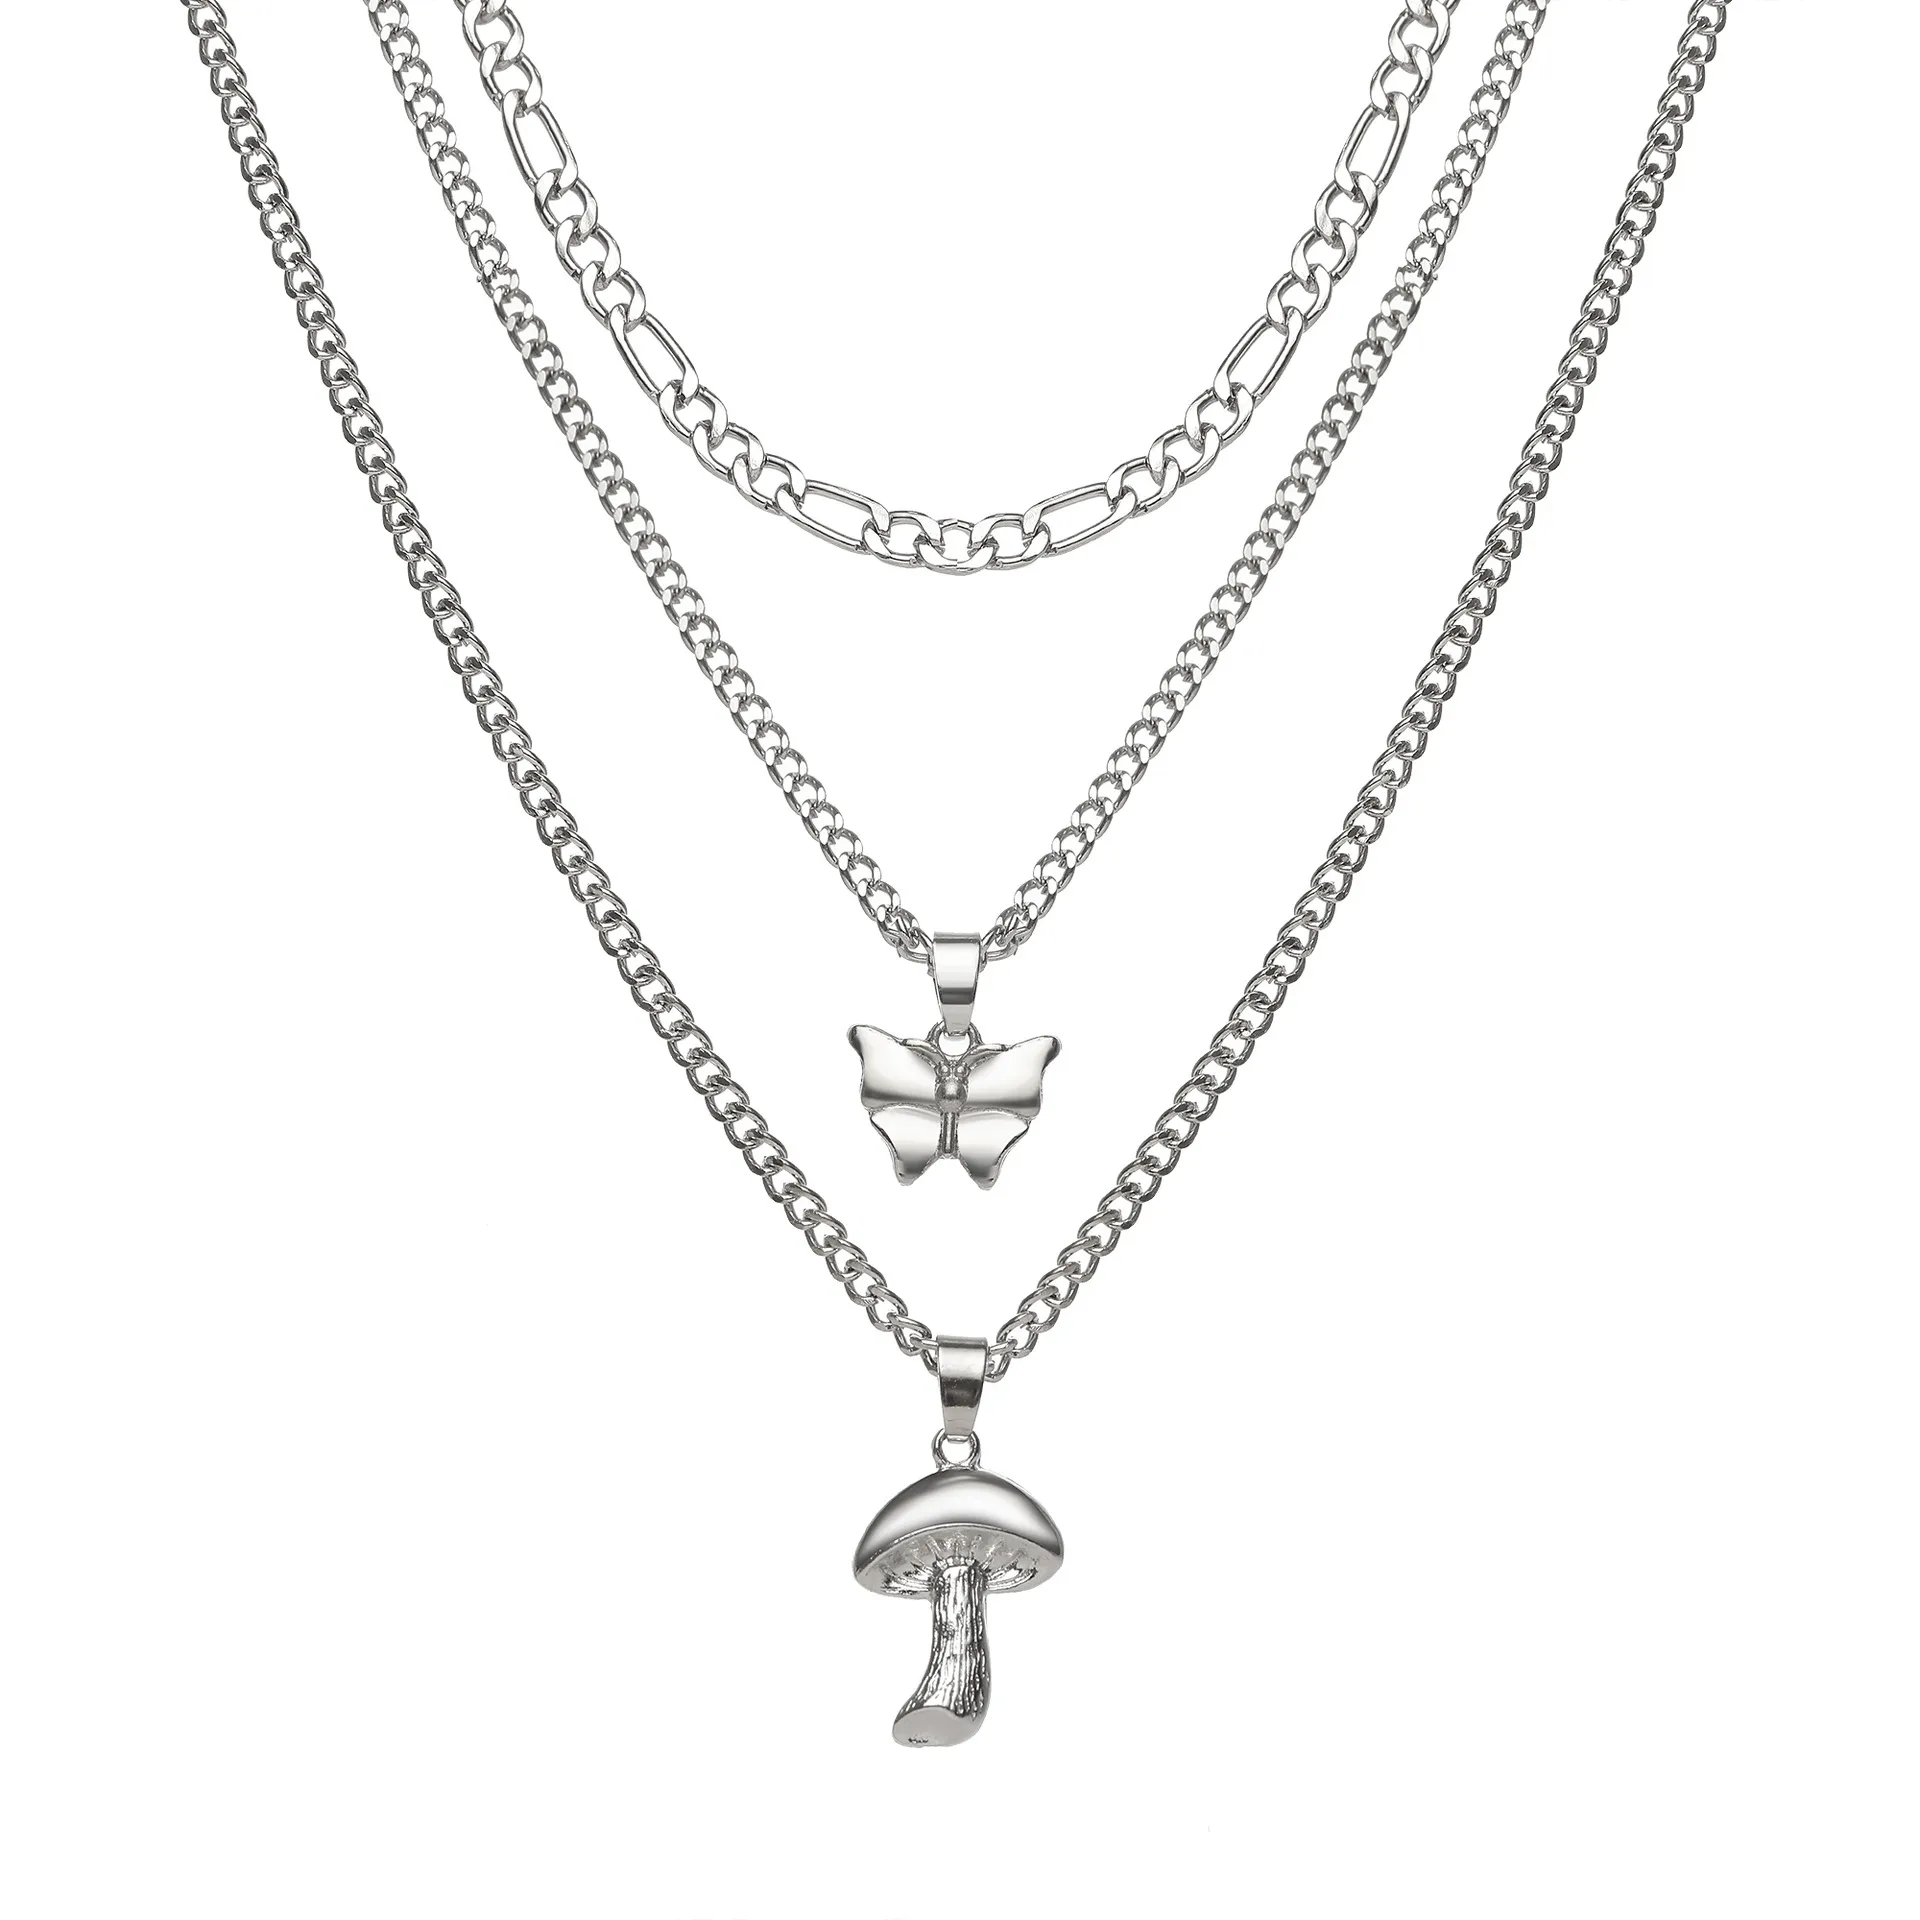 S2422 Fashion Jewelry Women Multi Layer Necklace Mushroom Pendant Choker Necklaces